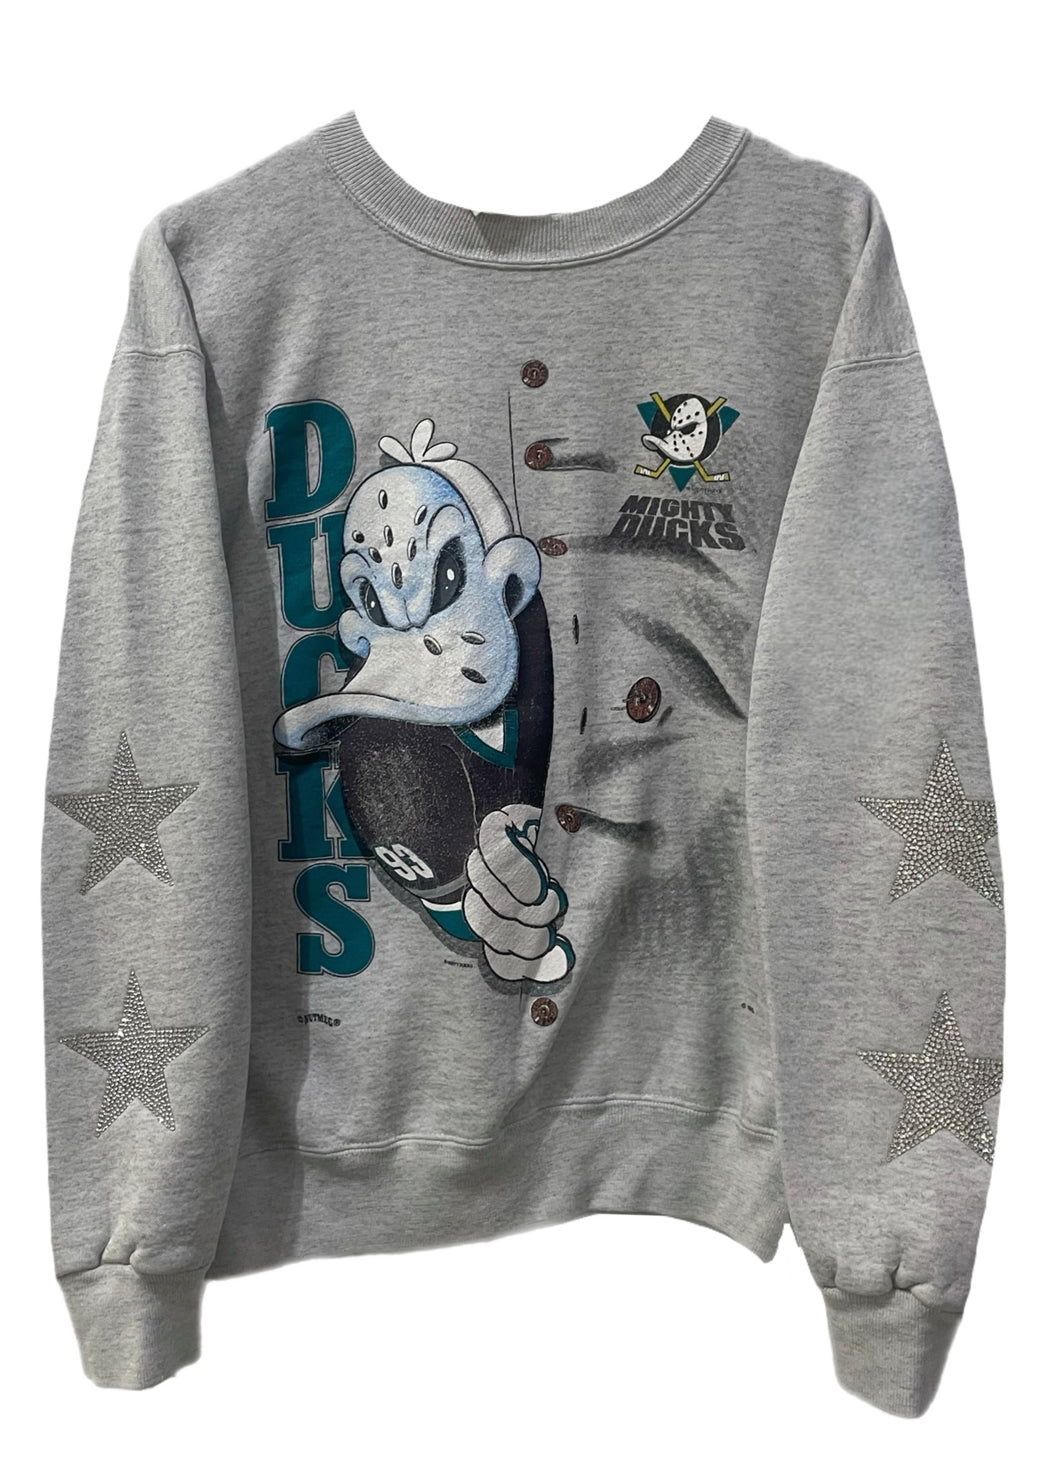 Anaheim Ducks, NHL One of a KIND Vintage “Mighty Ducks” Rare Find Sweatshirt with Crystal Star Design